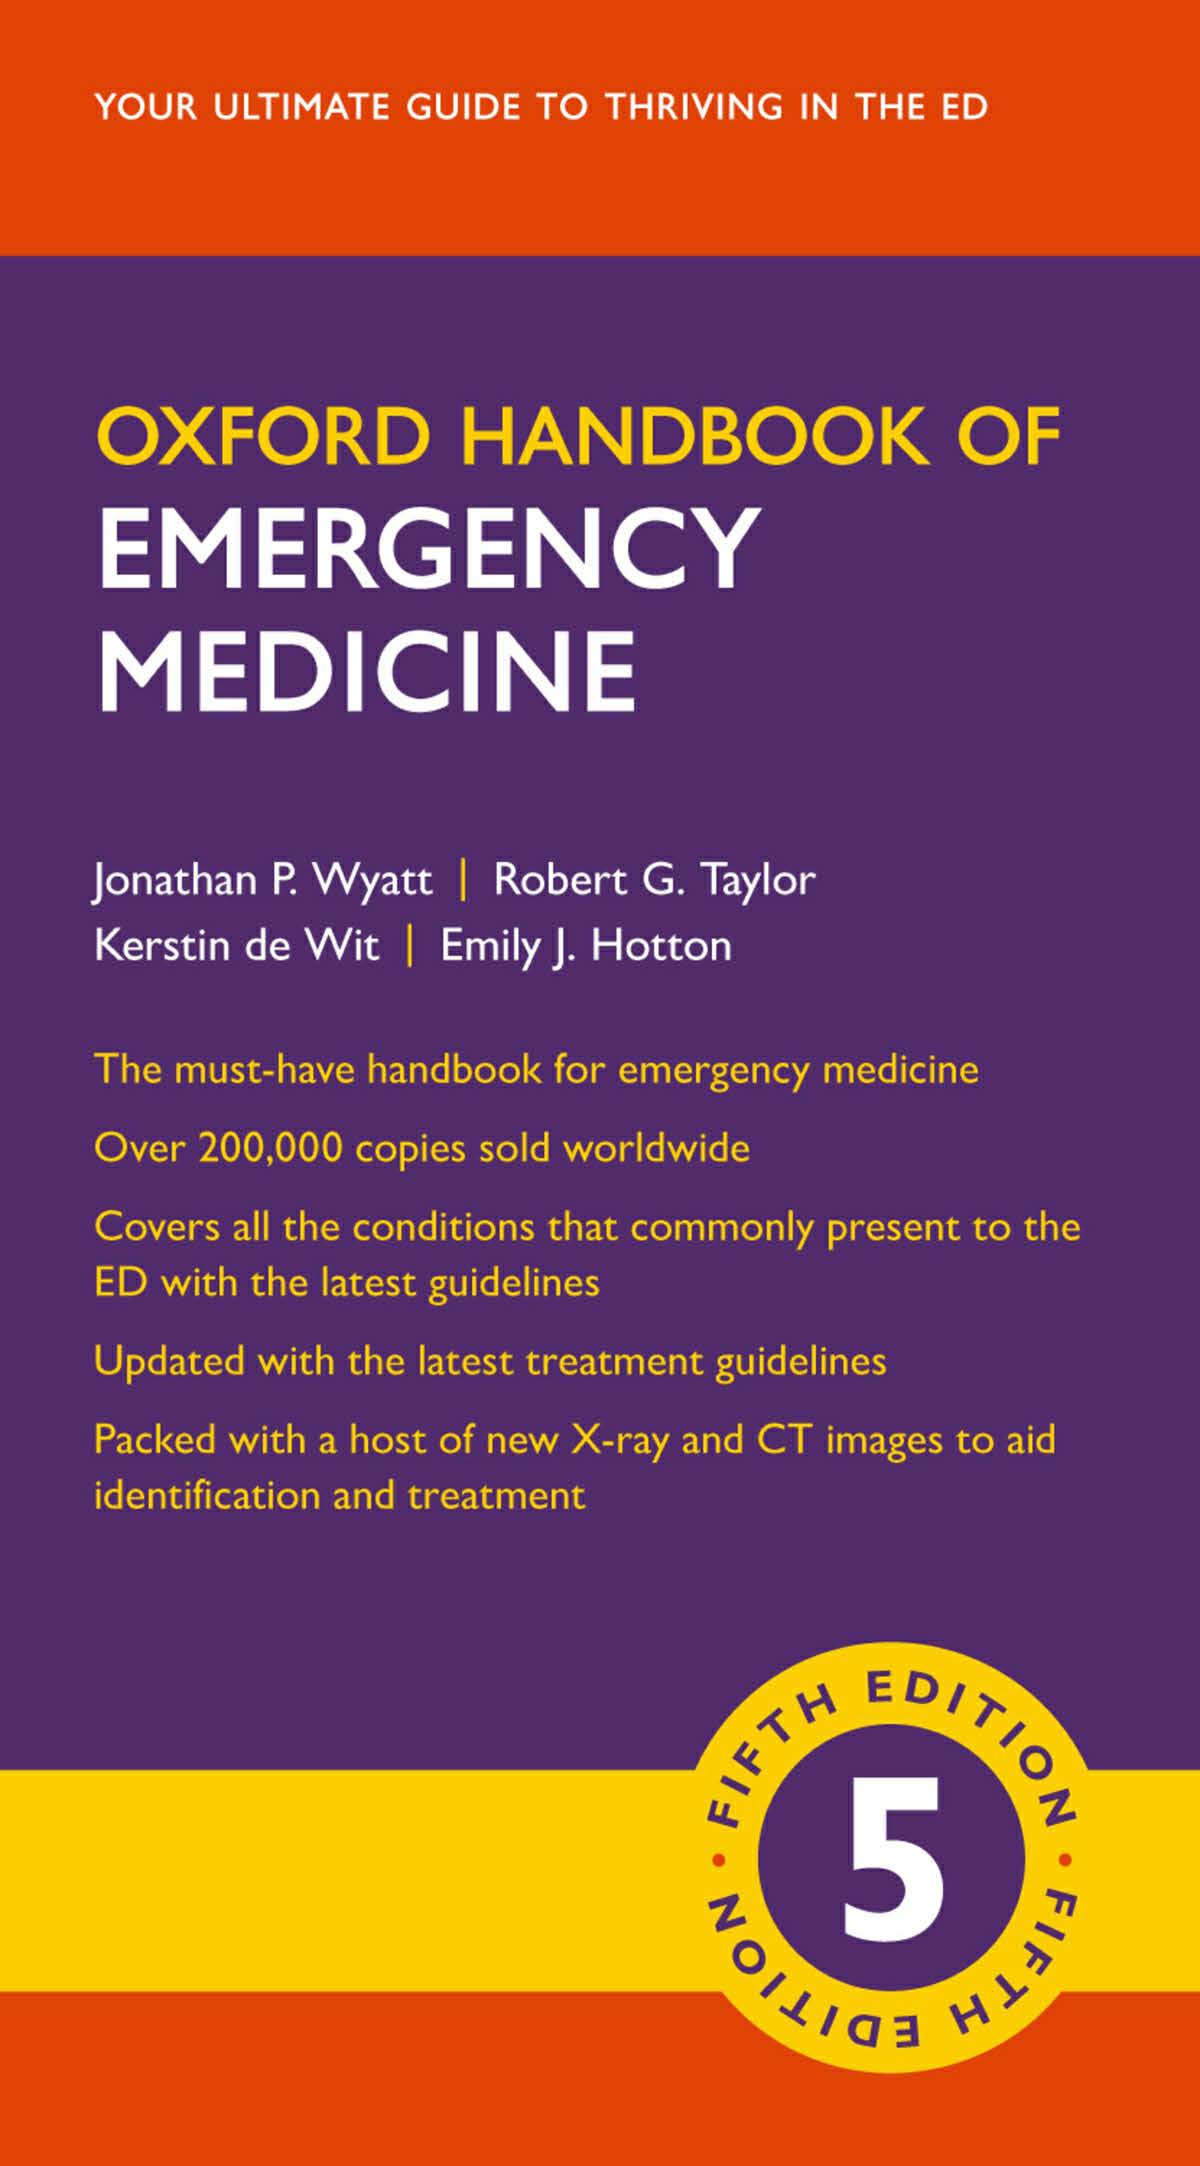 Oxford Handbook of Emergency Medicine 5e 2020 - Jonathan Wyatt